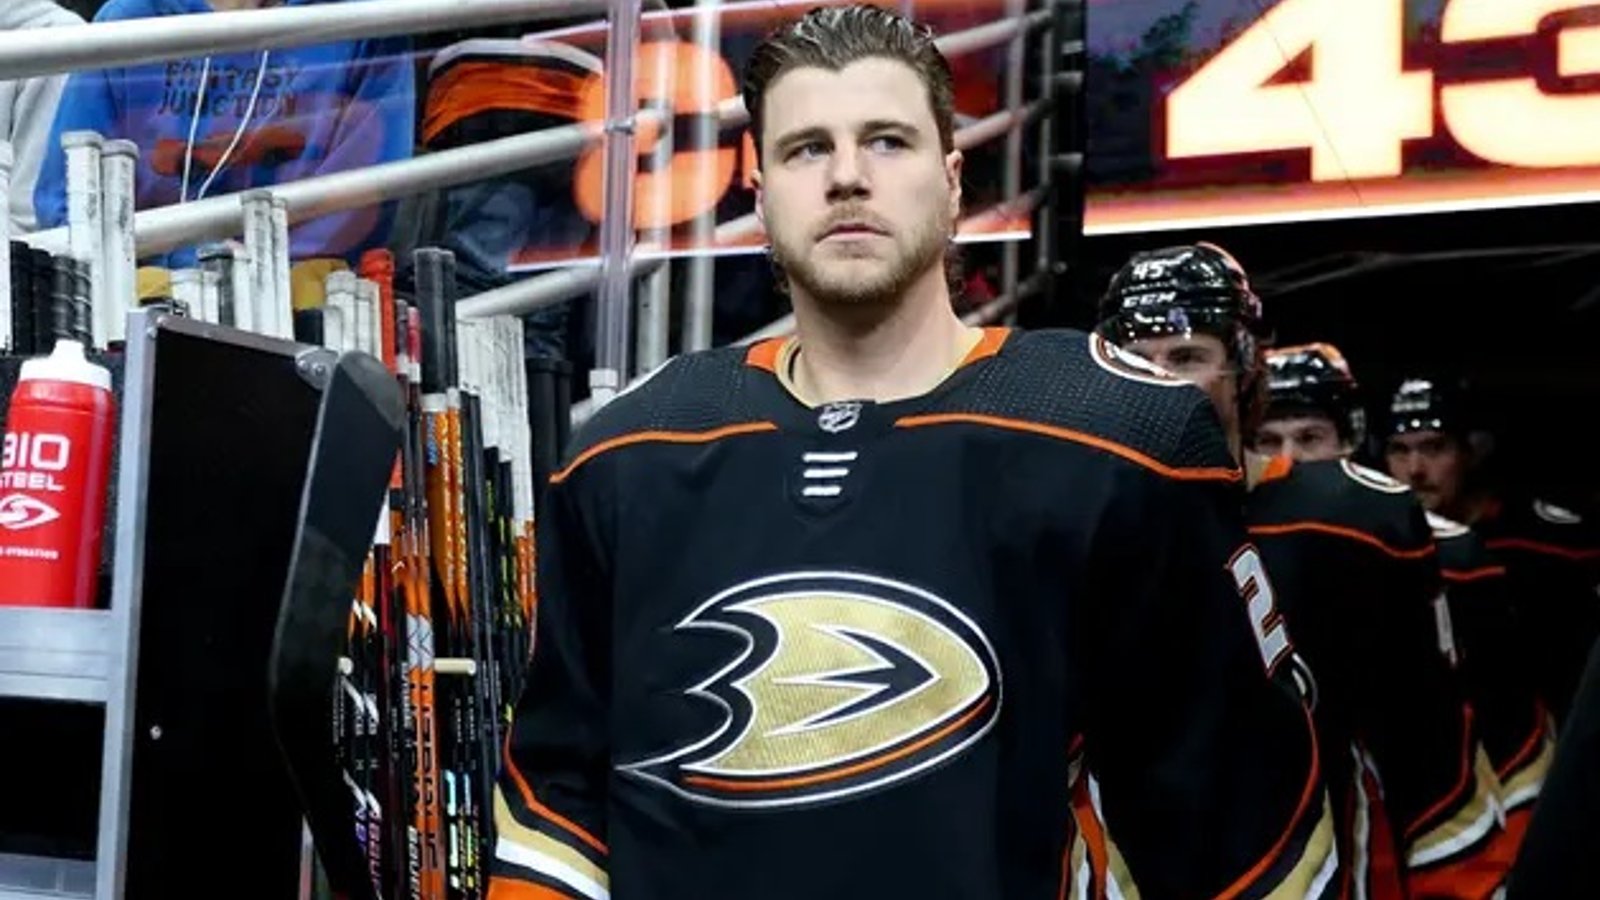 NHL profile photo on Anaheim Ducks player Nathan Beaulieu at a